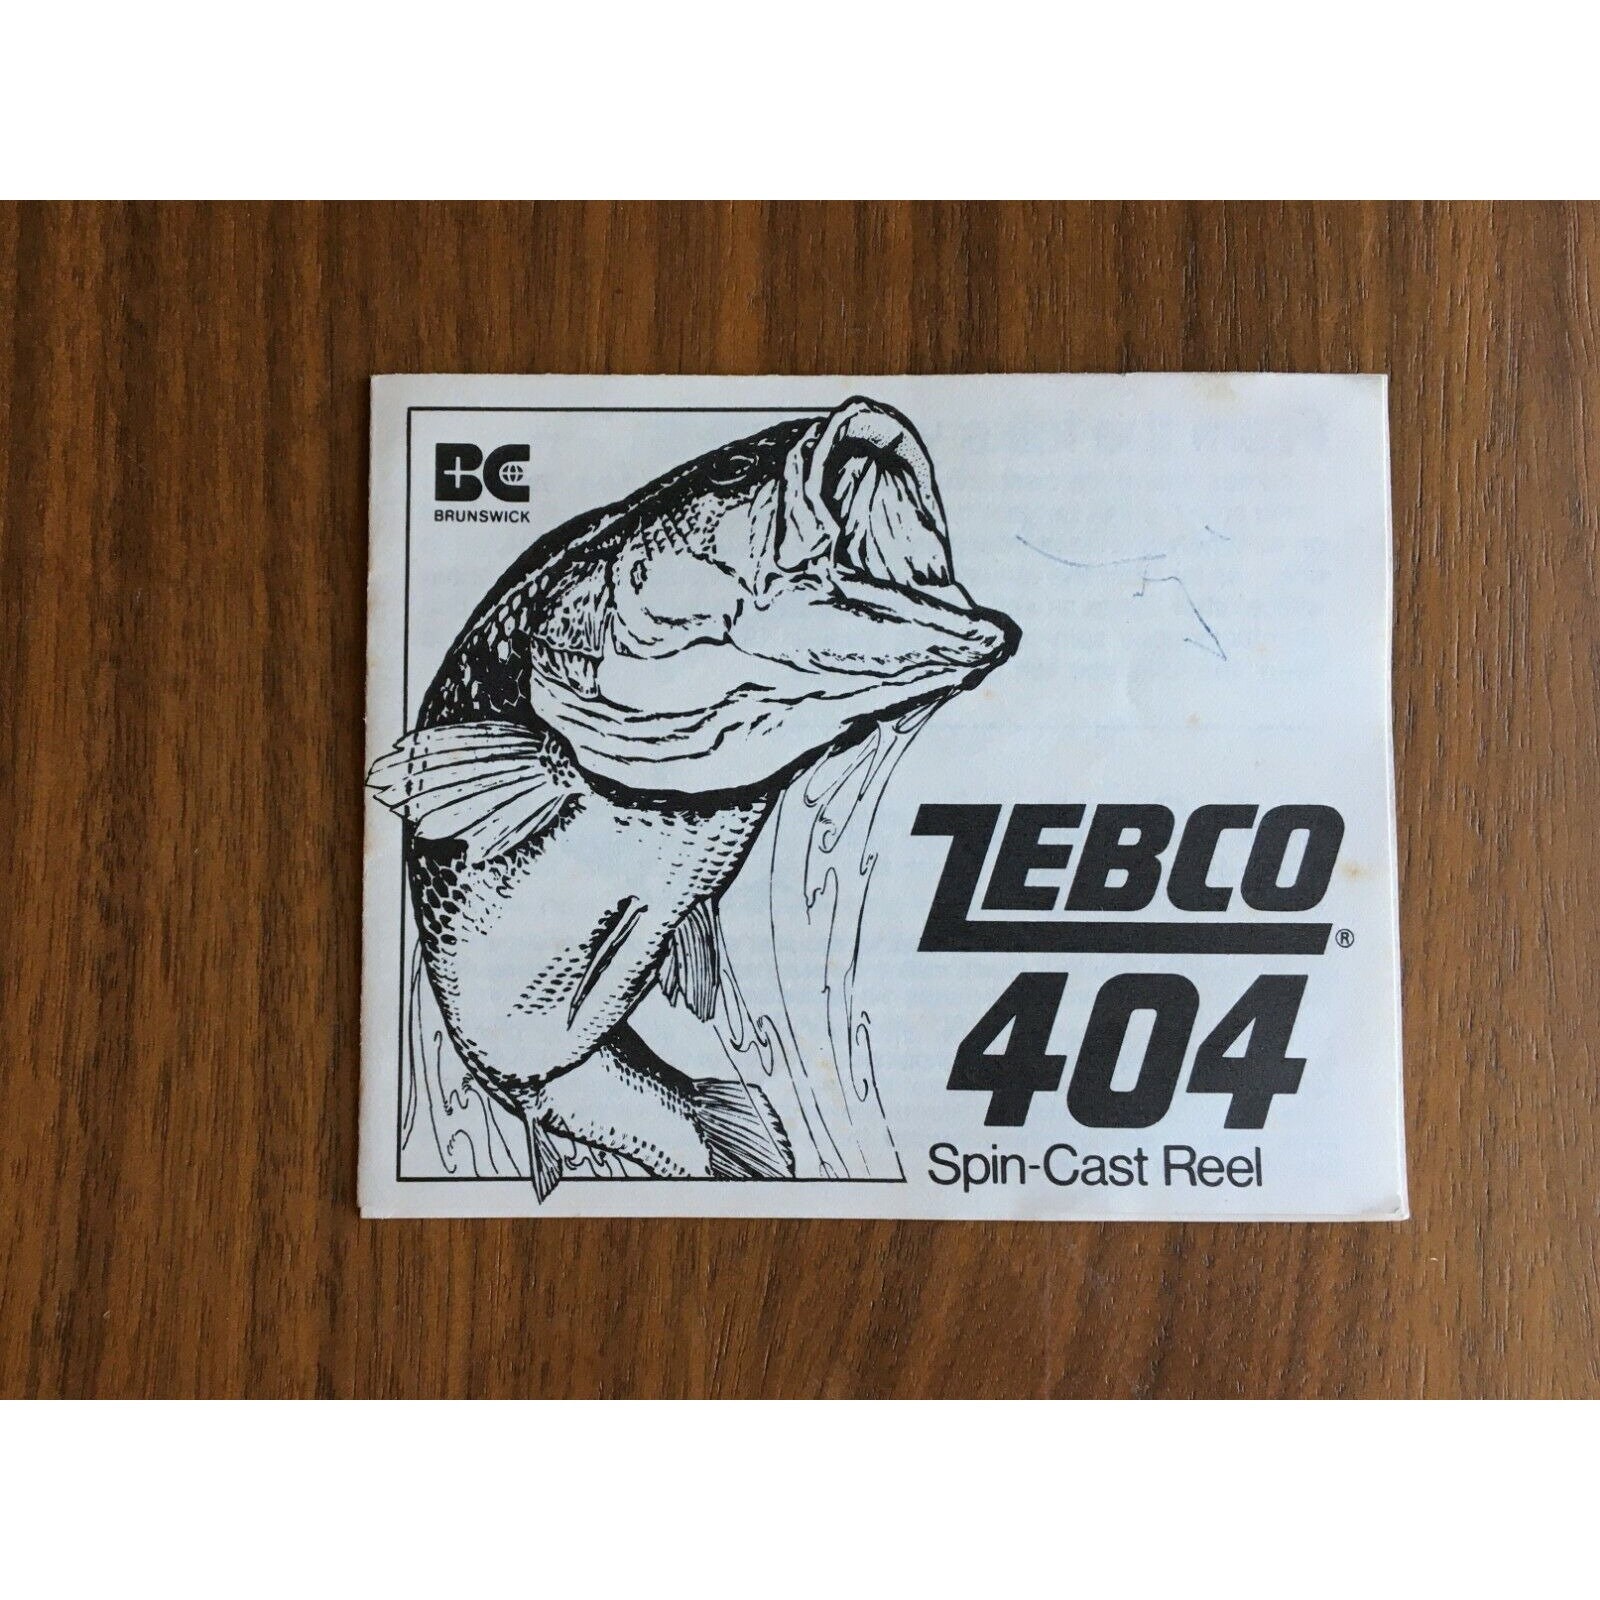 Zebco 404 Spin Cast Reel Brochure 